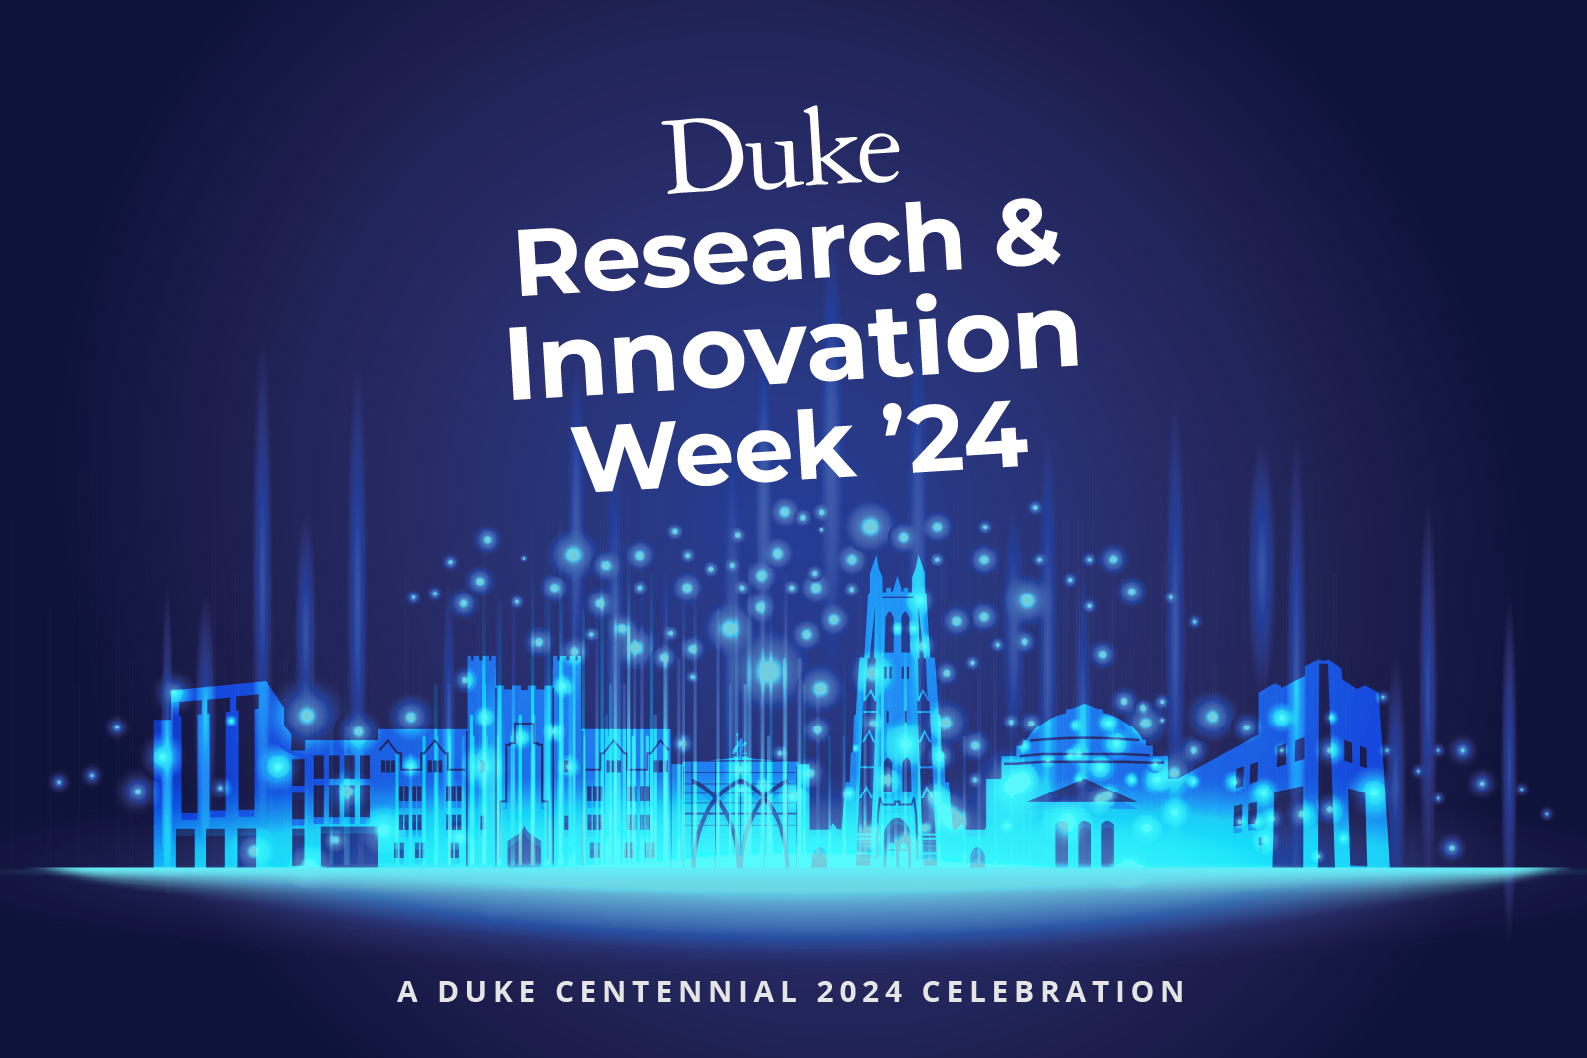 Duke Event Calendar